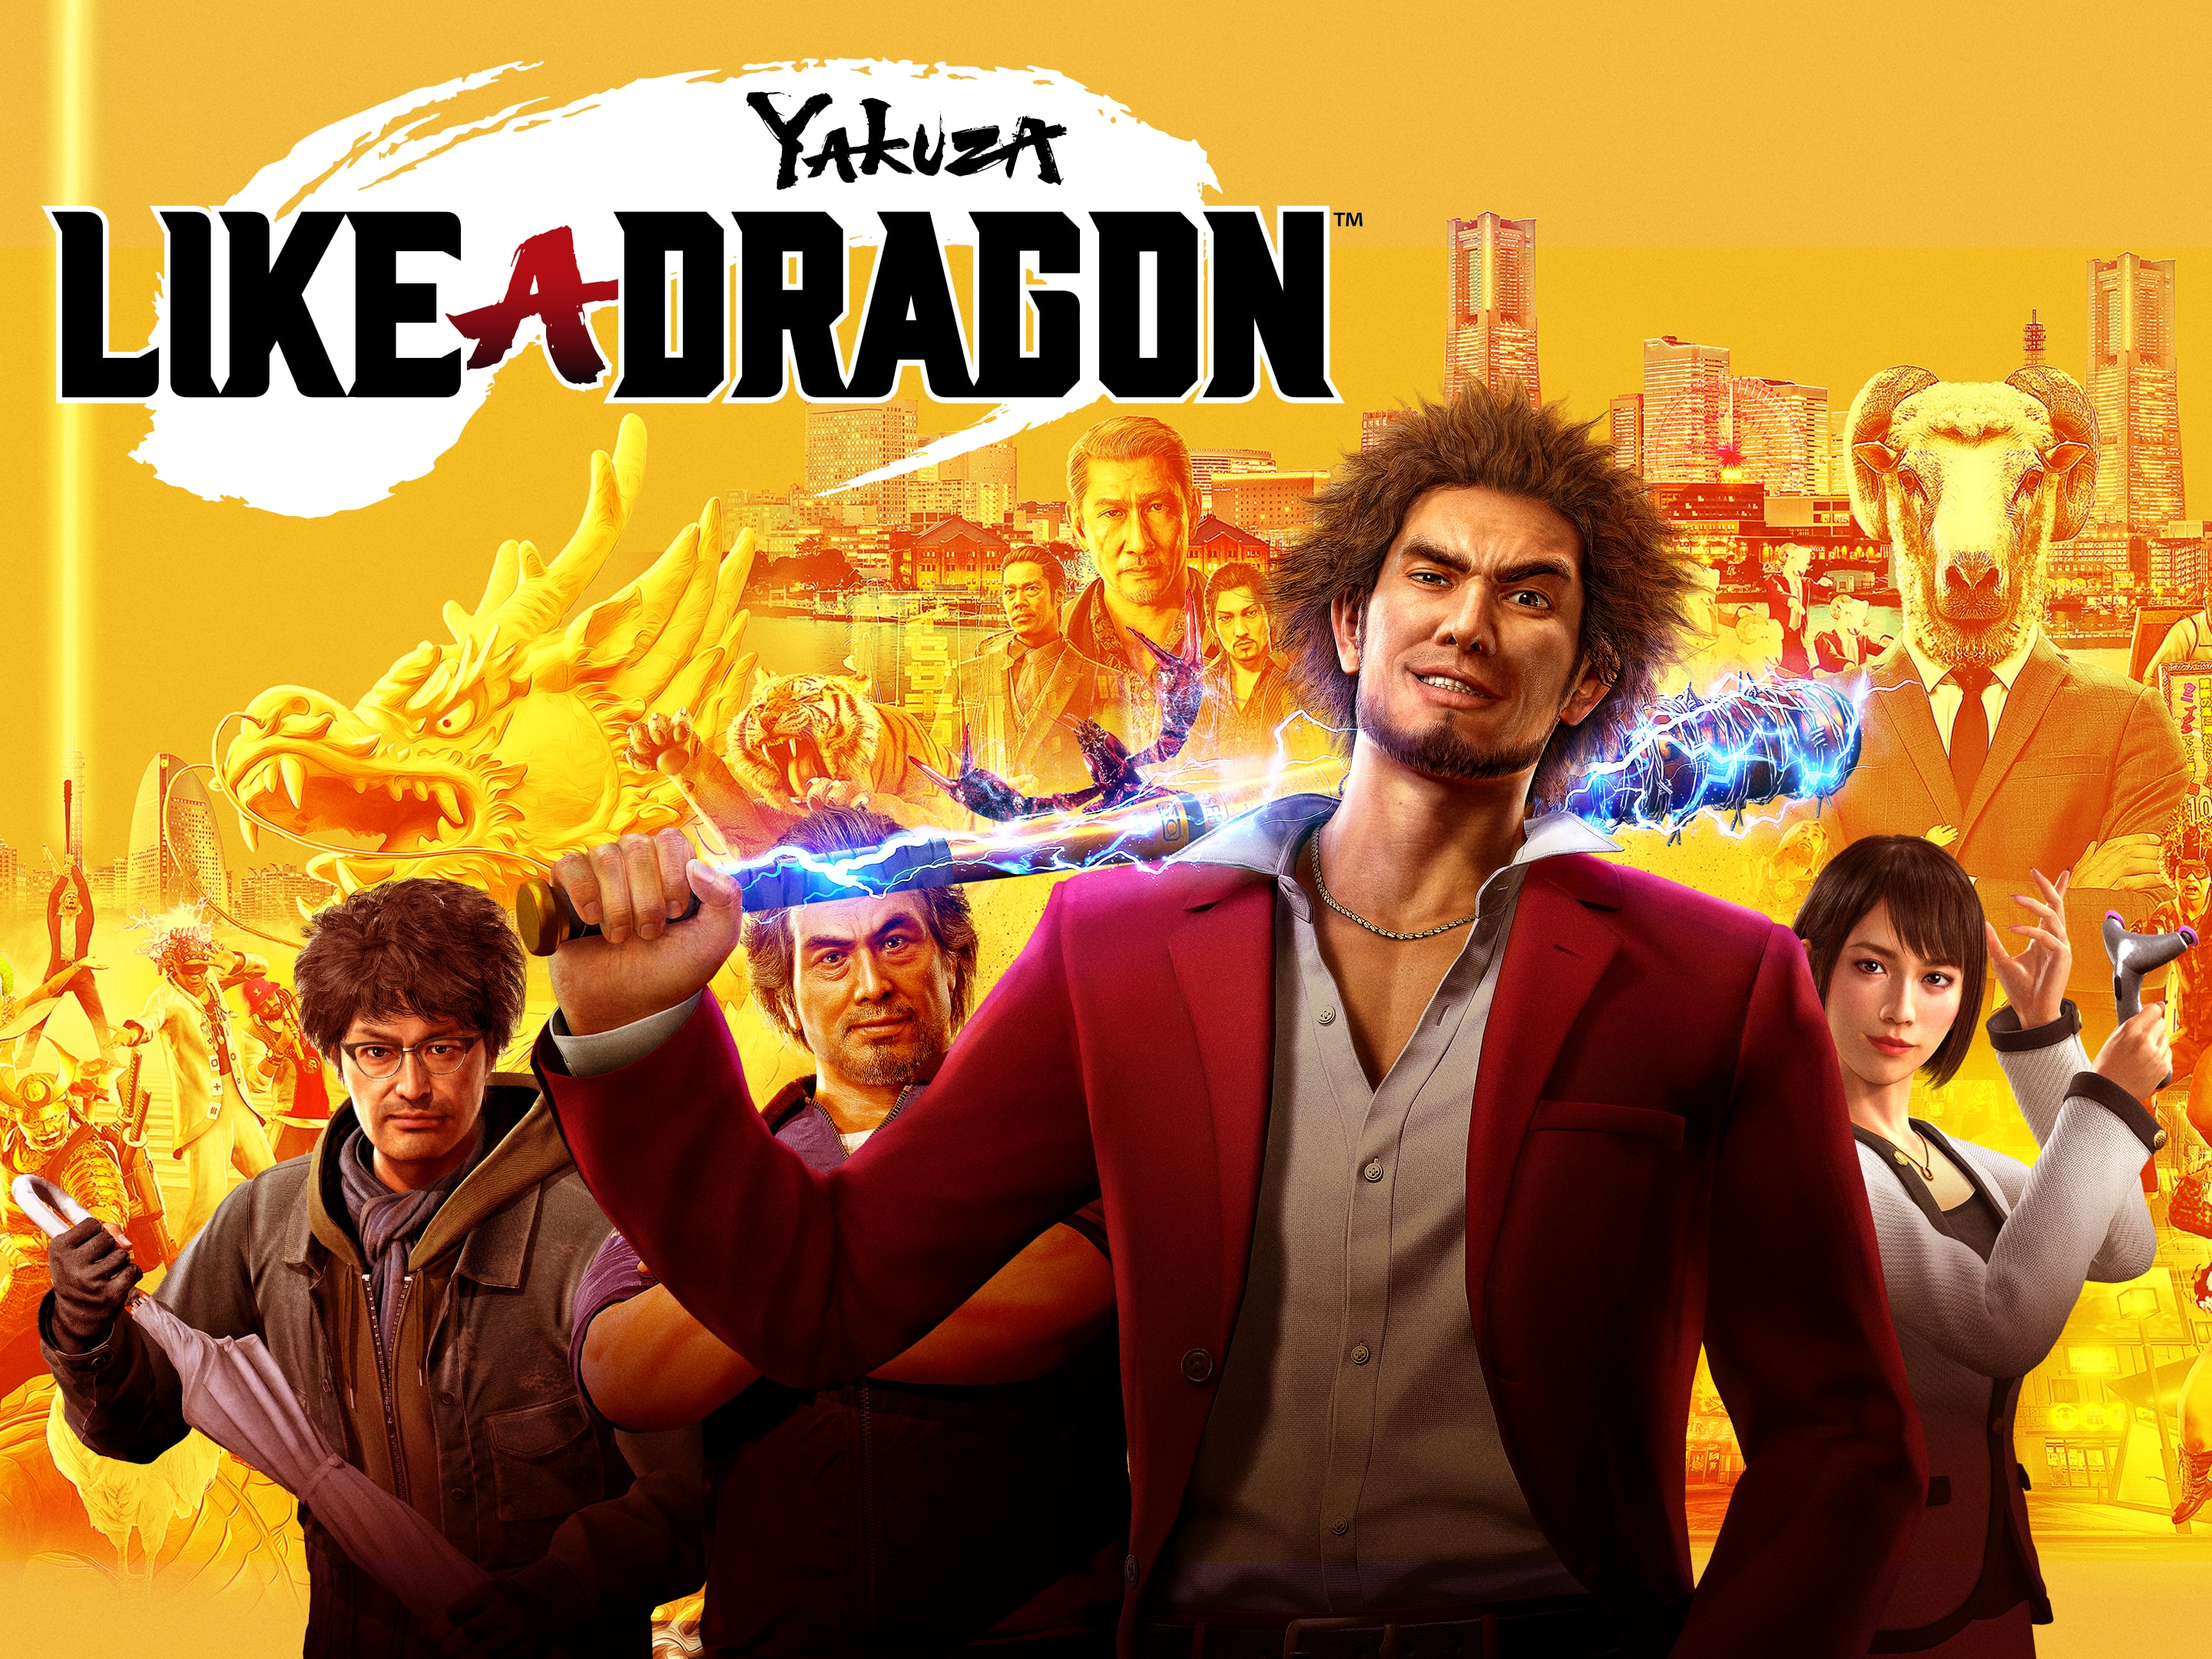 Yakuza: Like a Dragon Legendary Hero Edition PS4 & PS5